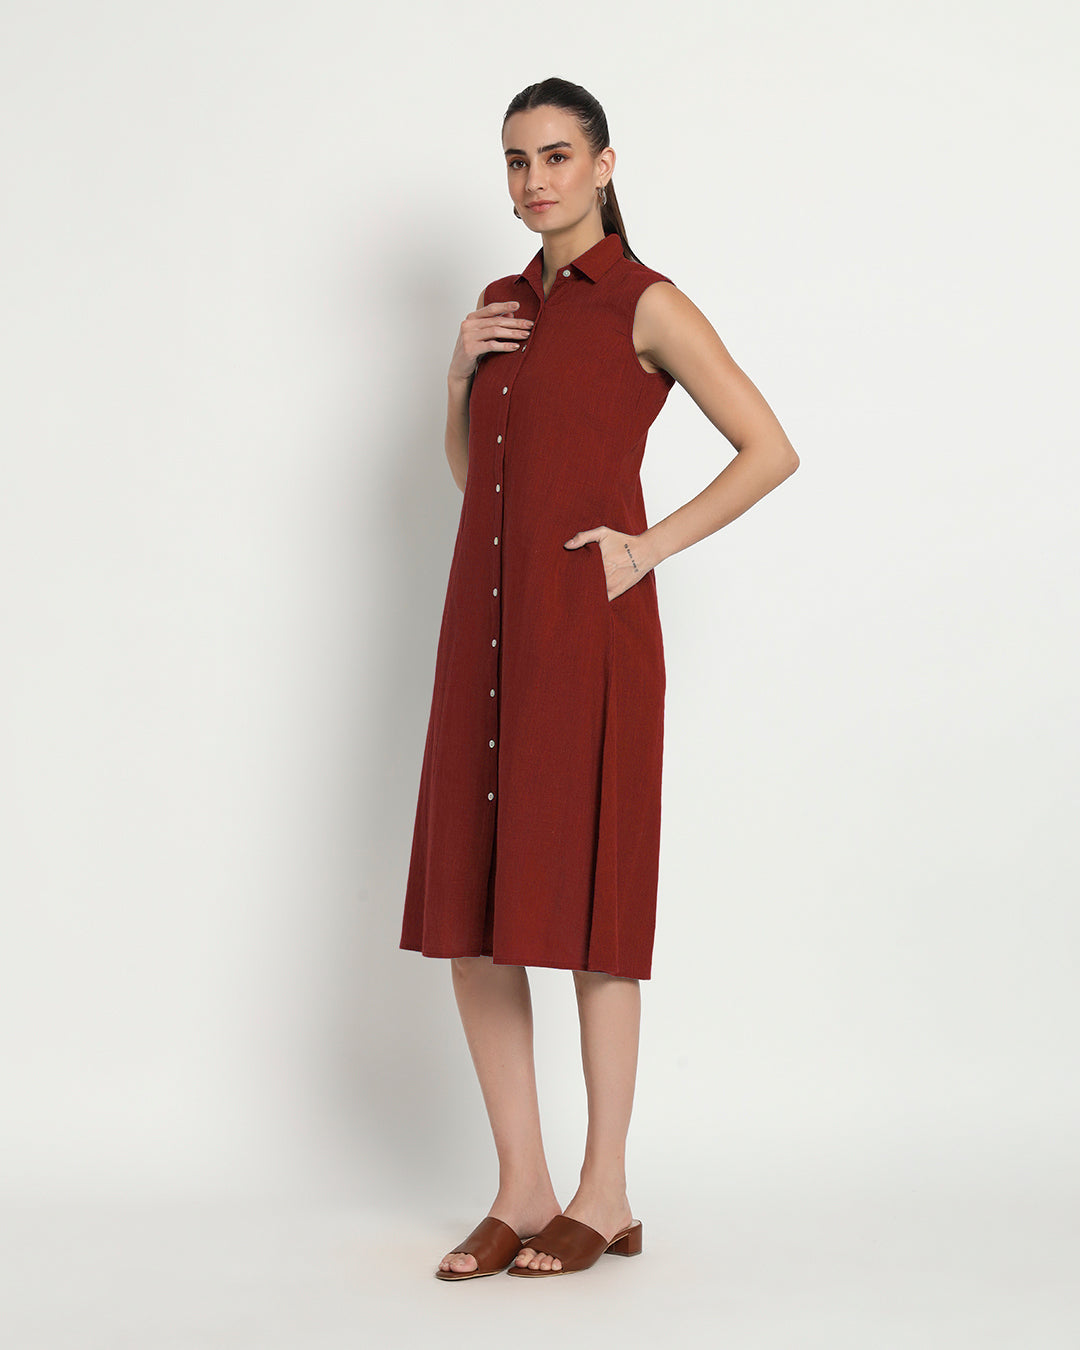 Russet Red Artful A-Line Dress